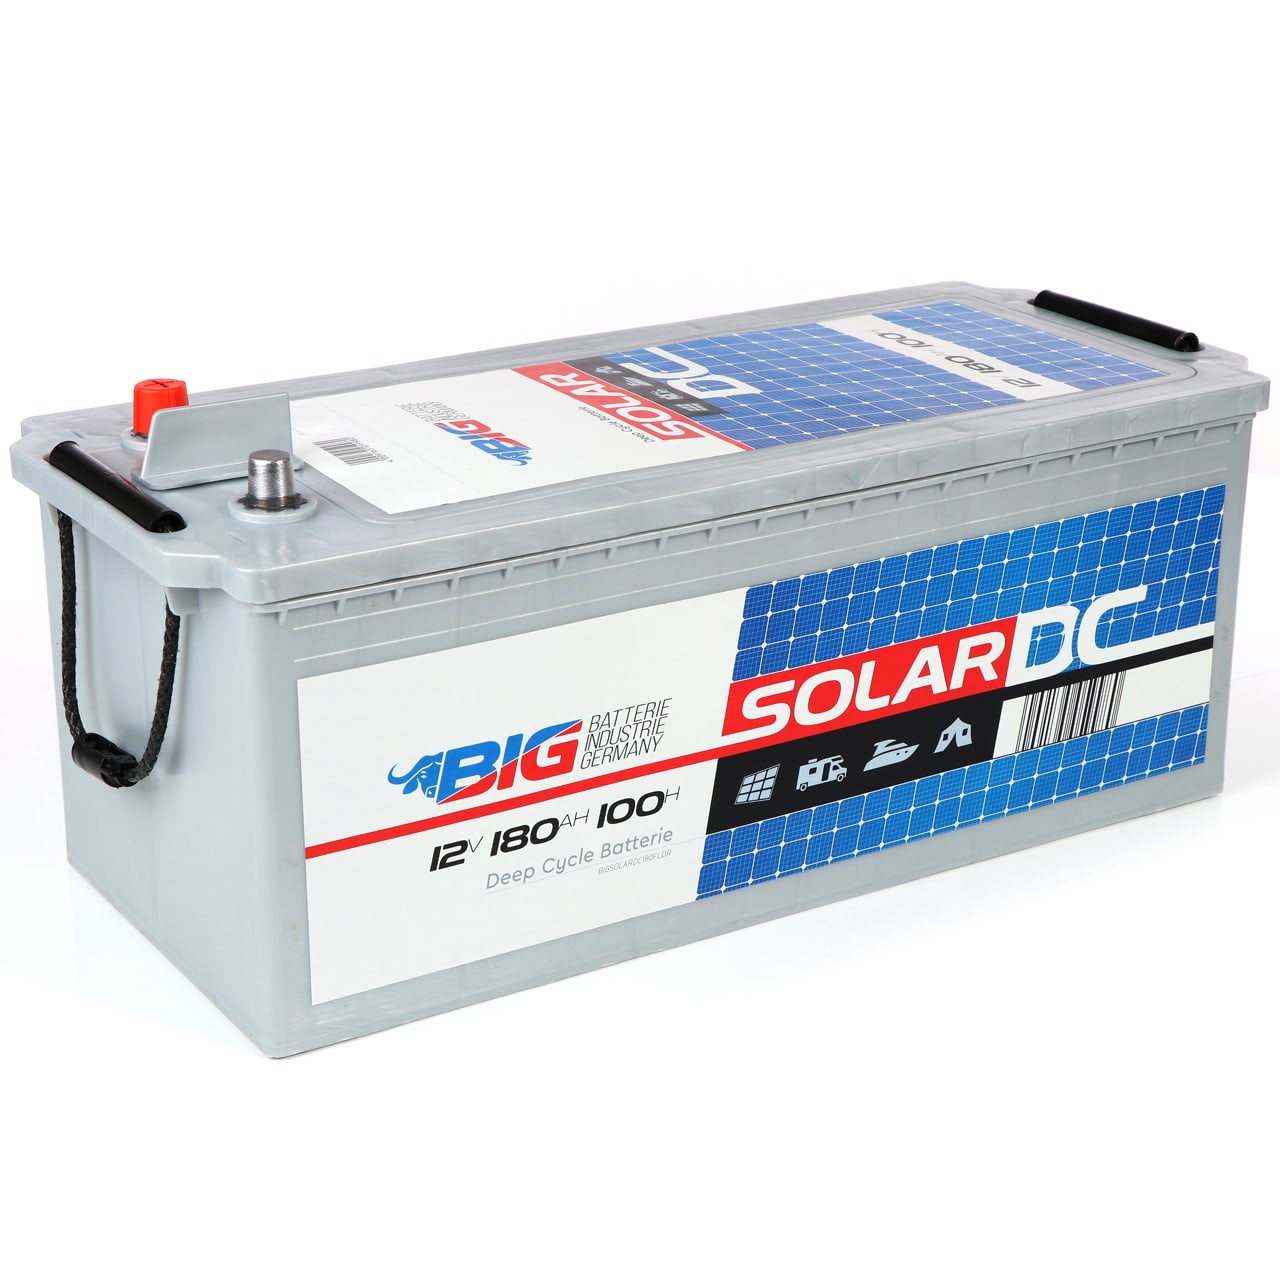 BIG Solarbatterie 12V 180Ah Professional statt 150Ah 140Ah 130Ah